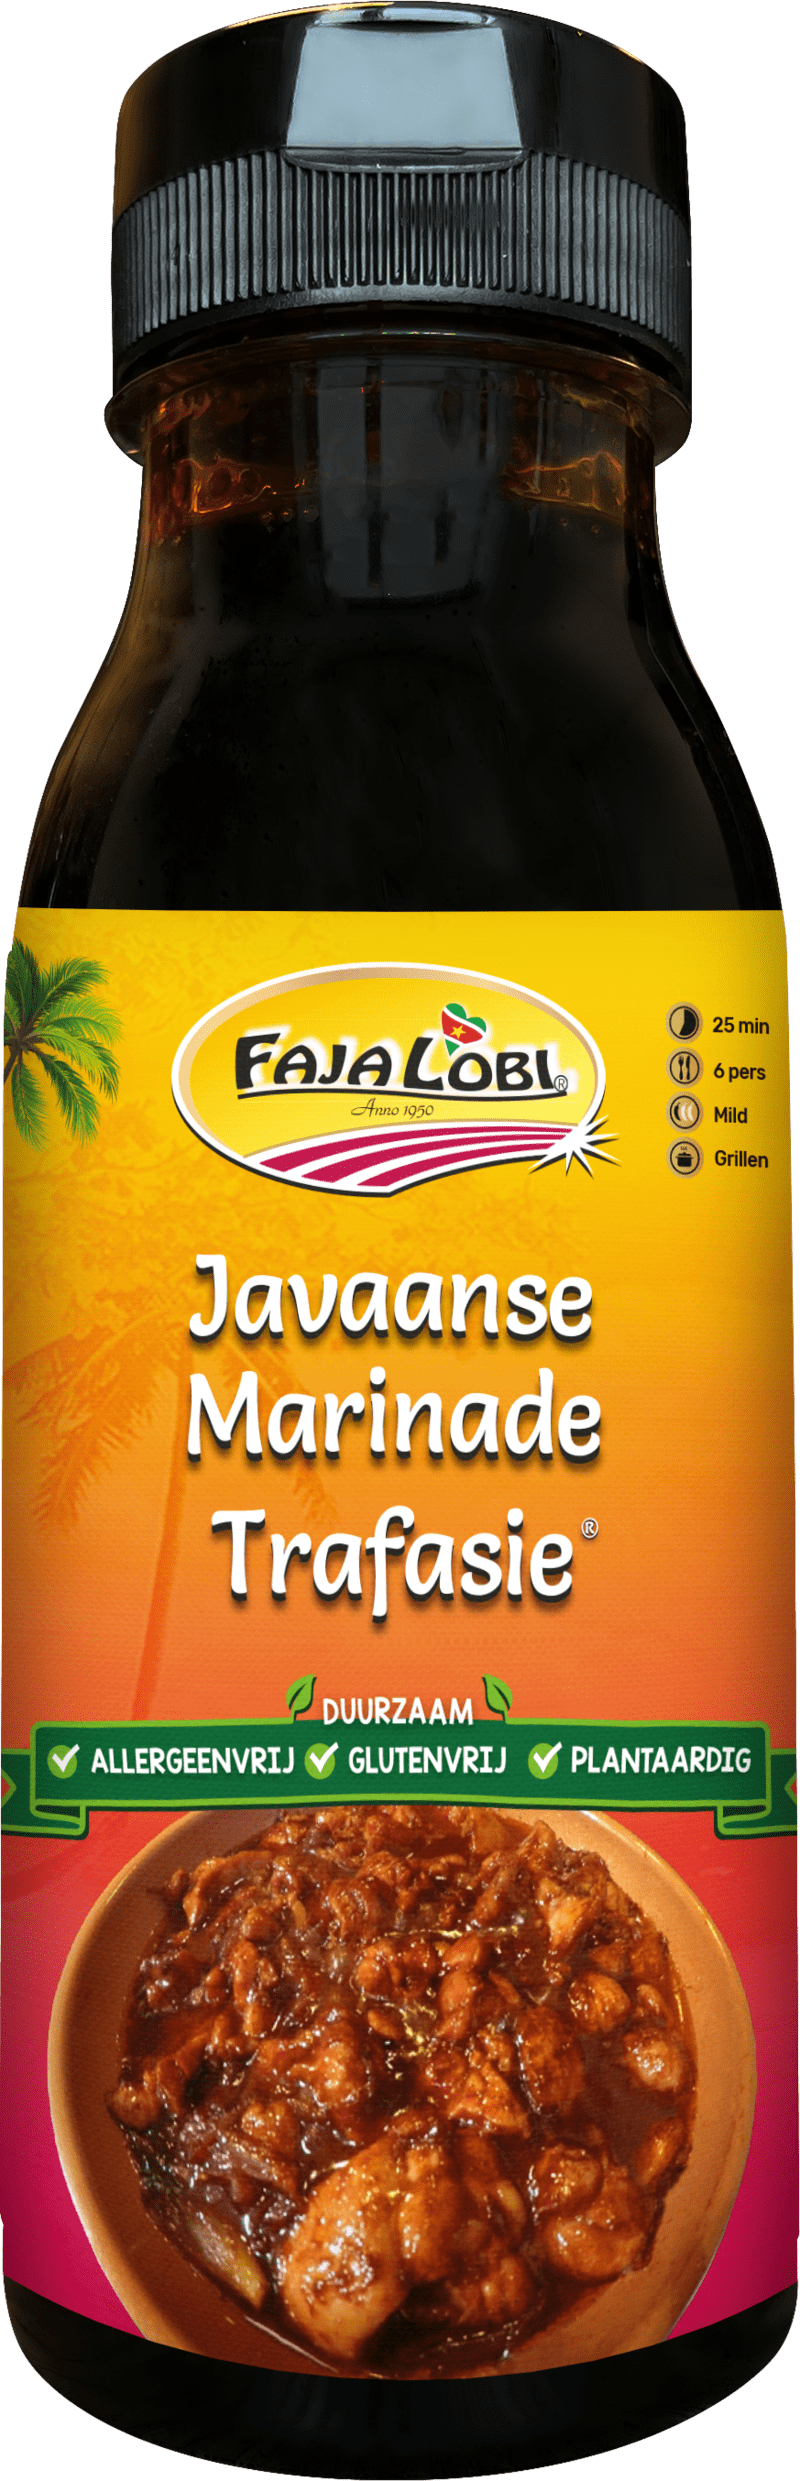 FAJA LOBI Javaanse Marinade Trafasie 250 ml